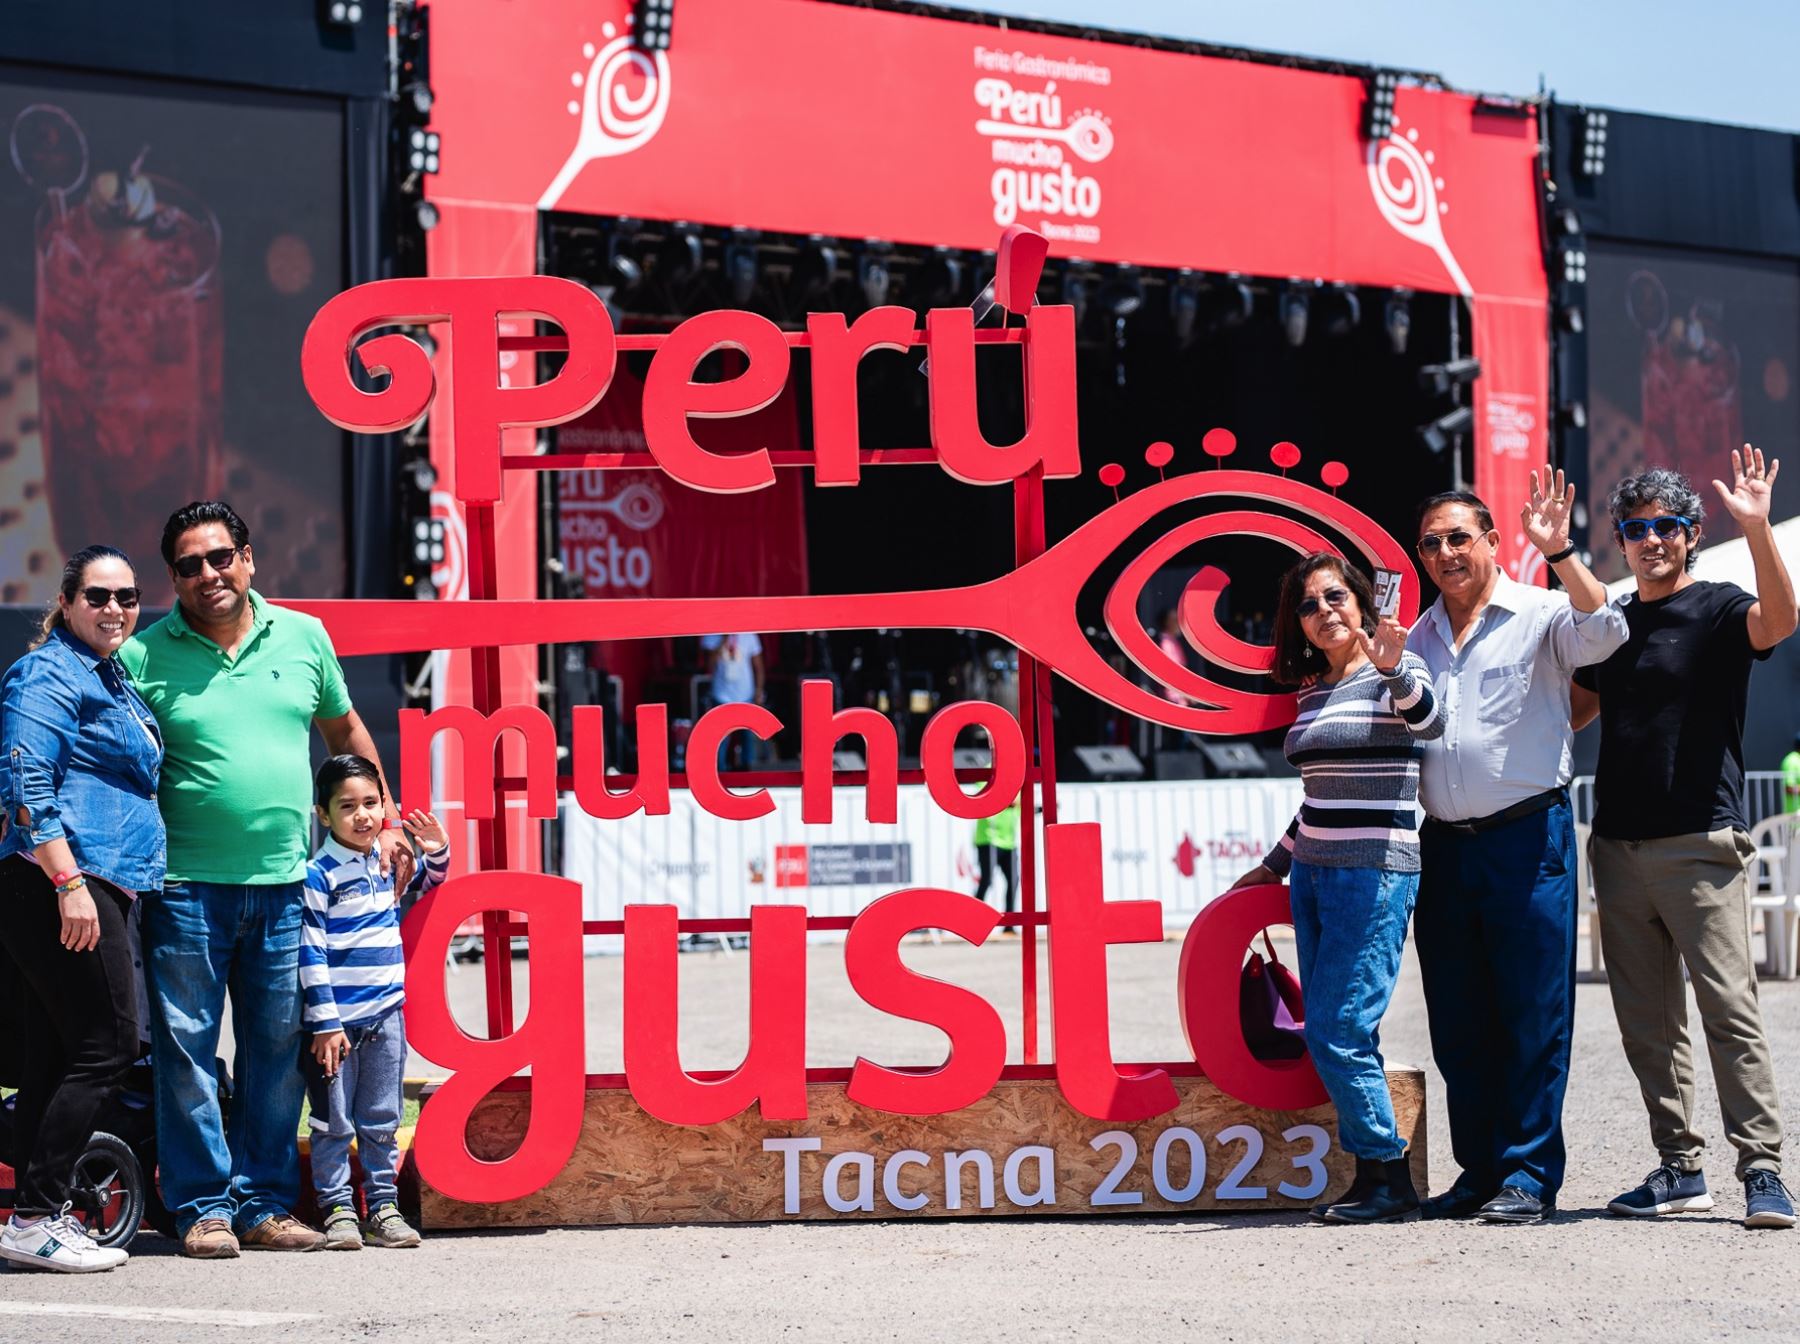 Perú, Mucho Gusto Tacna fue un éxito total: feria gastronómica recibió a 45,000 asistentes. Foto: ANDINA/difusión.